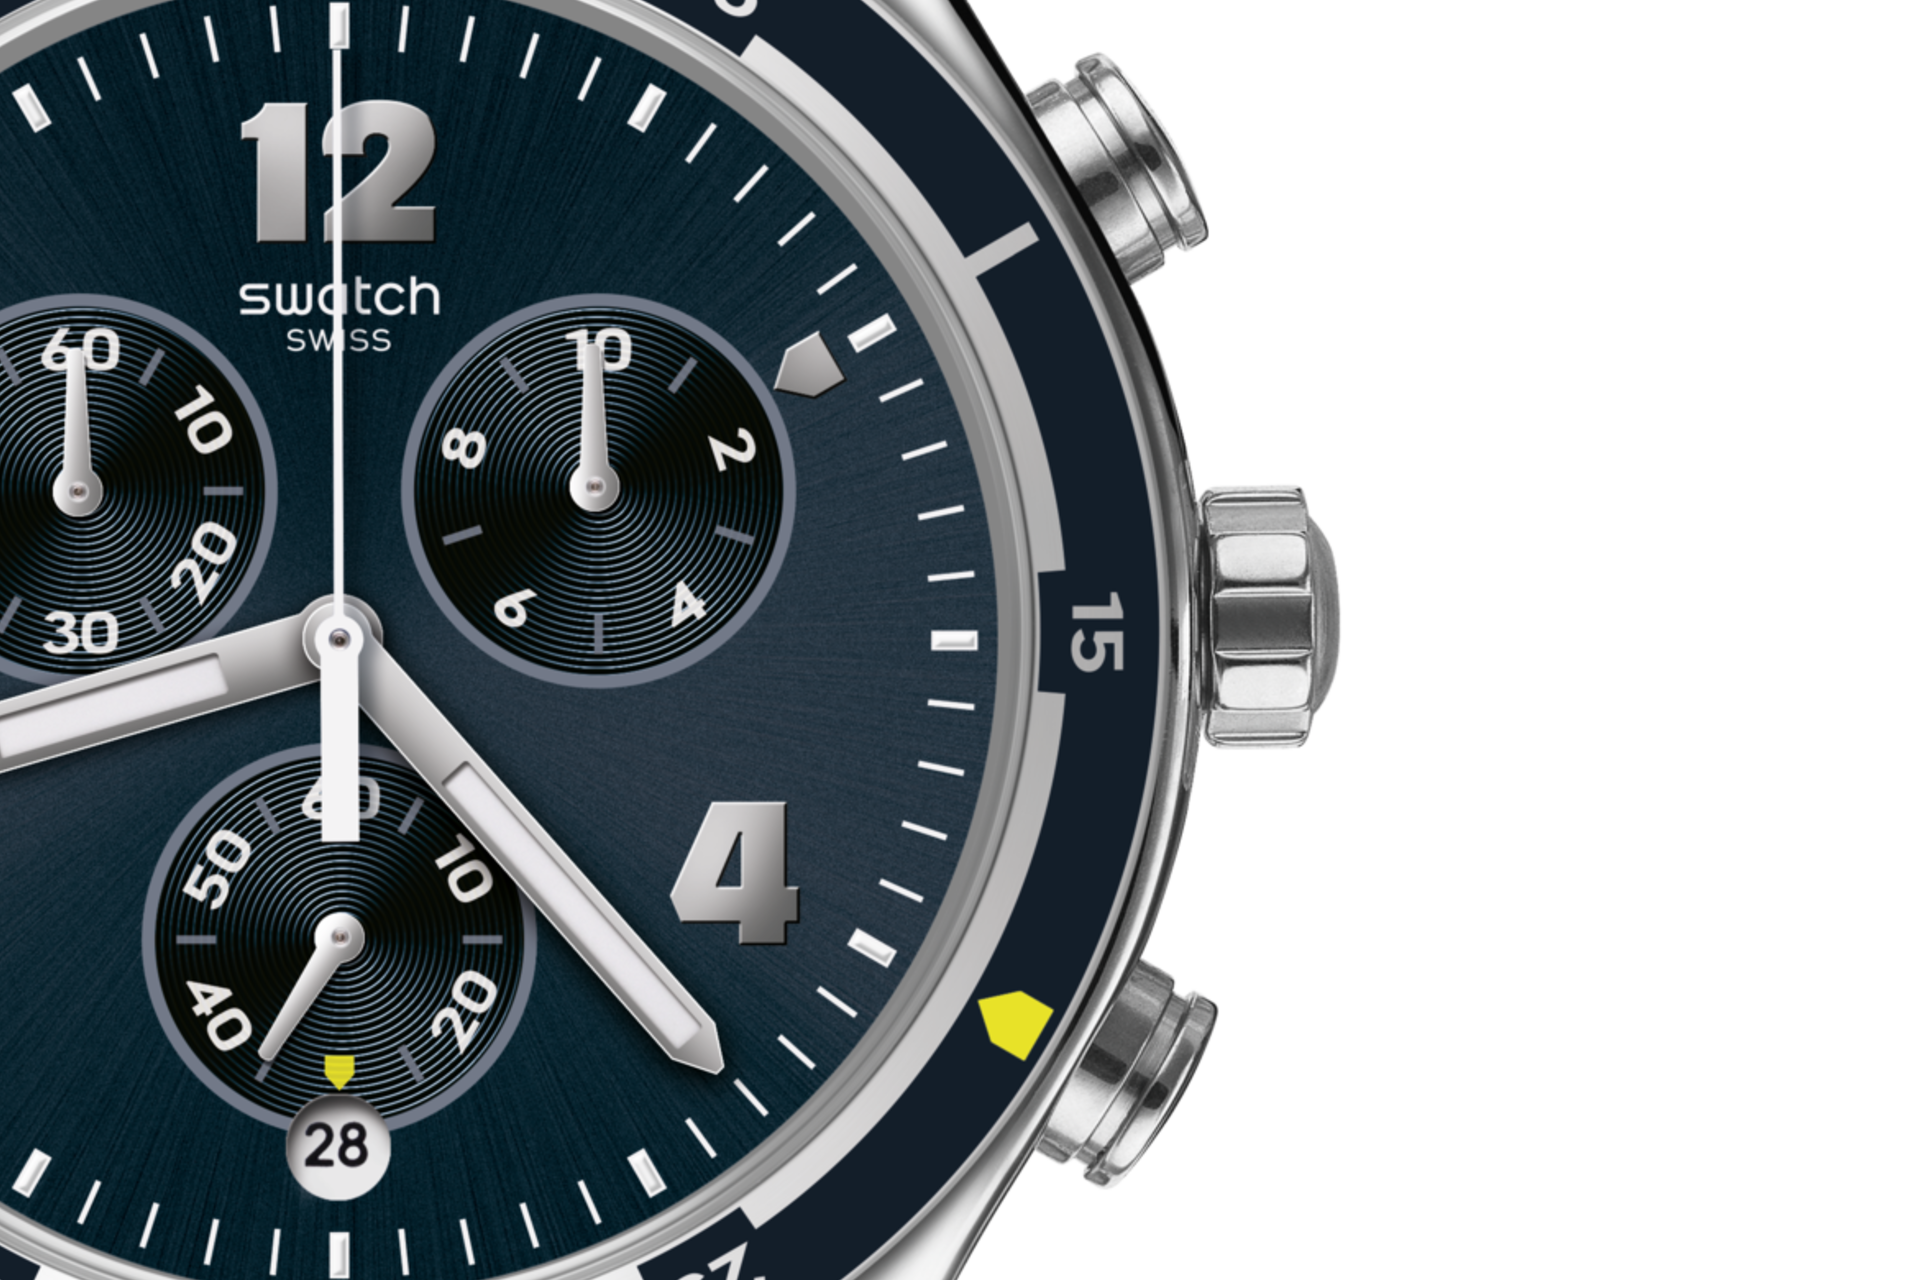 Reloj Swatch Hombre Irony Chrono Meshme YVS457G - Joyería de Moda